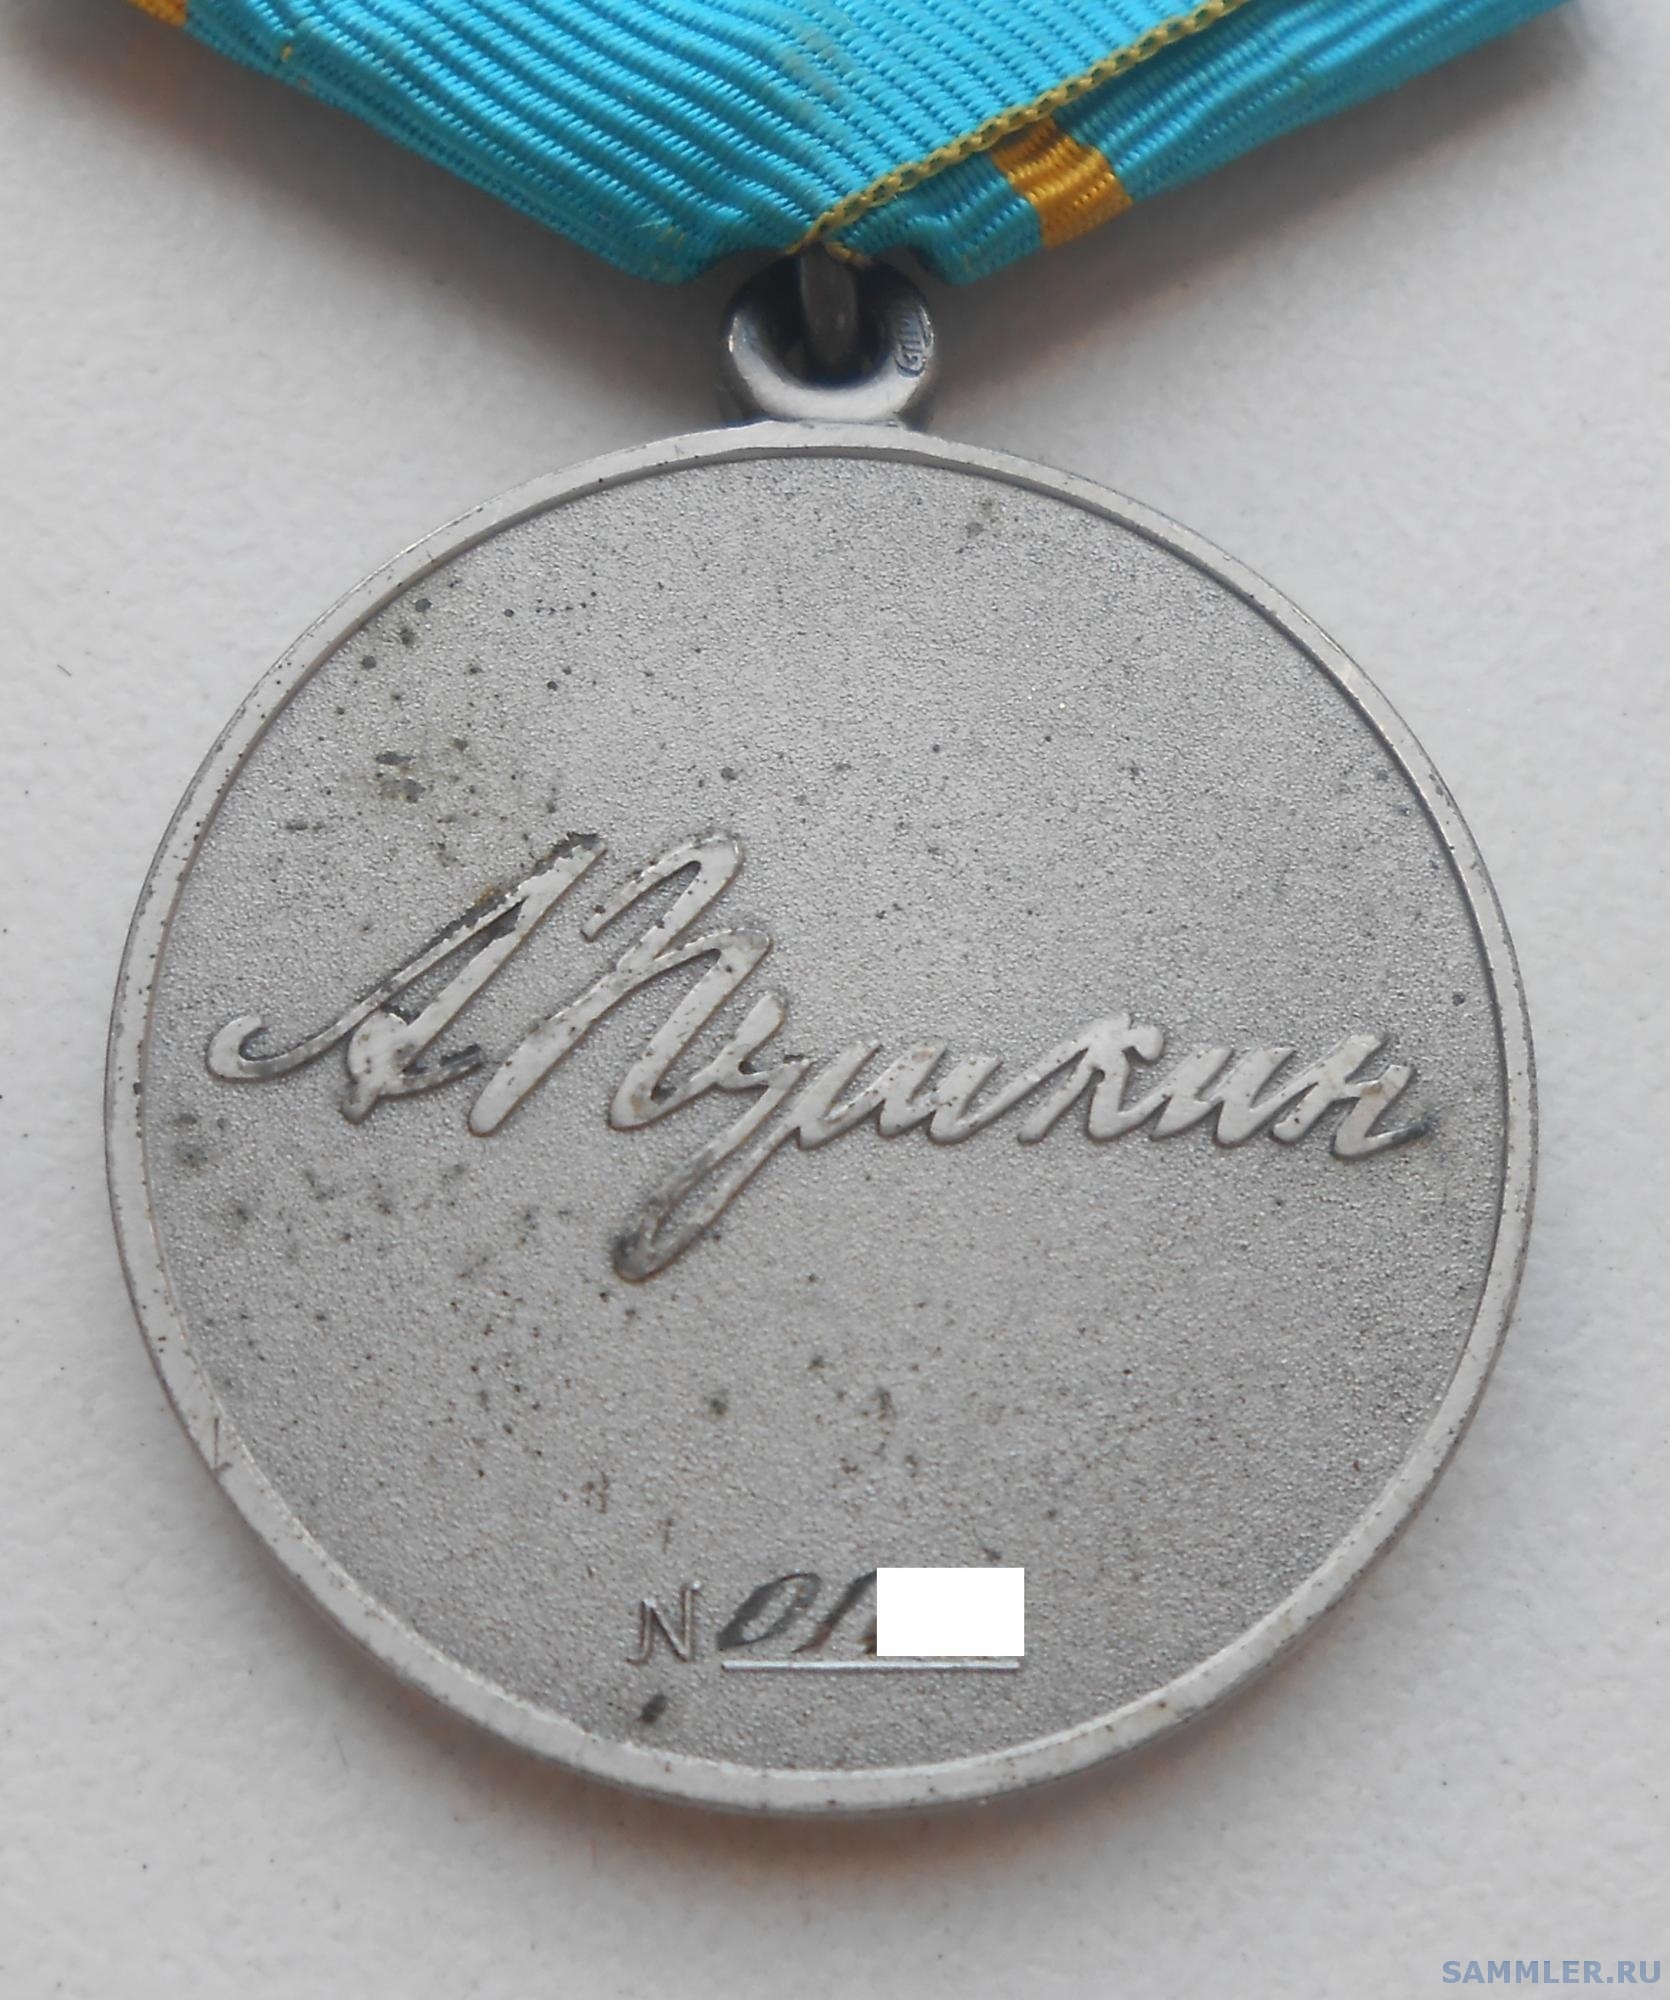 DSCN0654 Медаль Пушкина 2 реверс.jpg